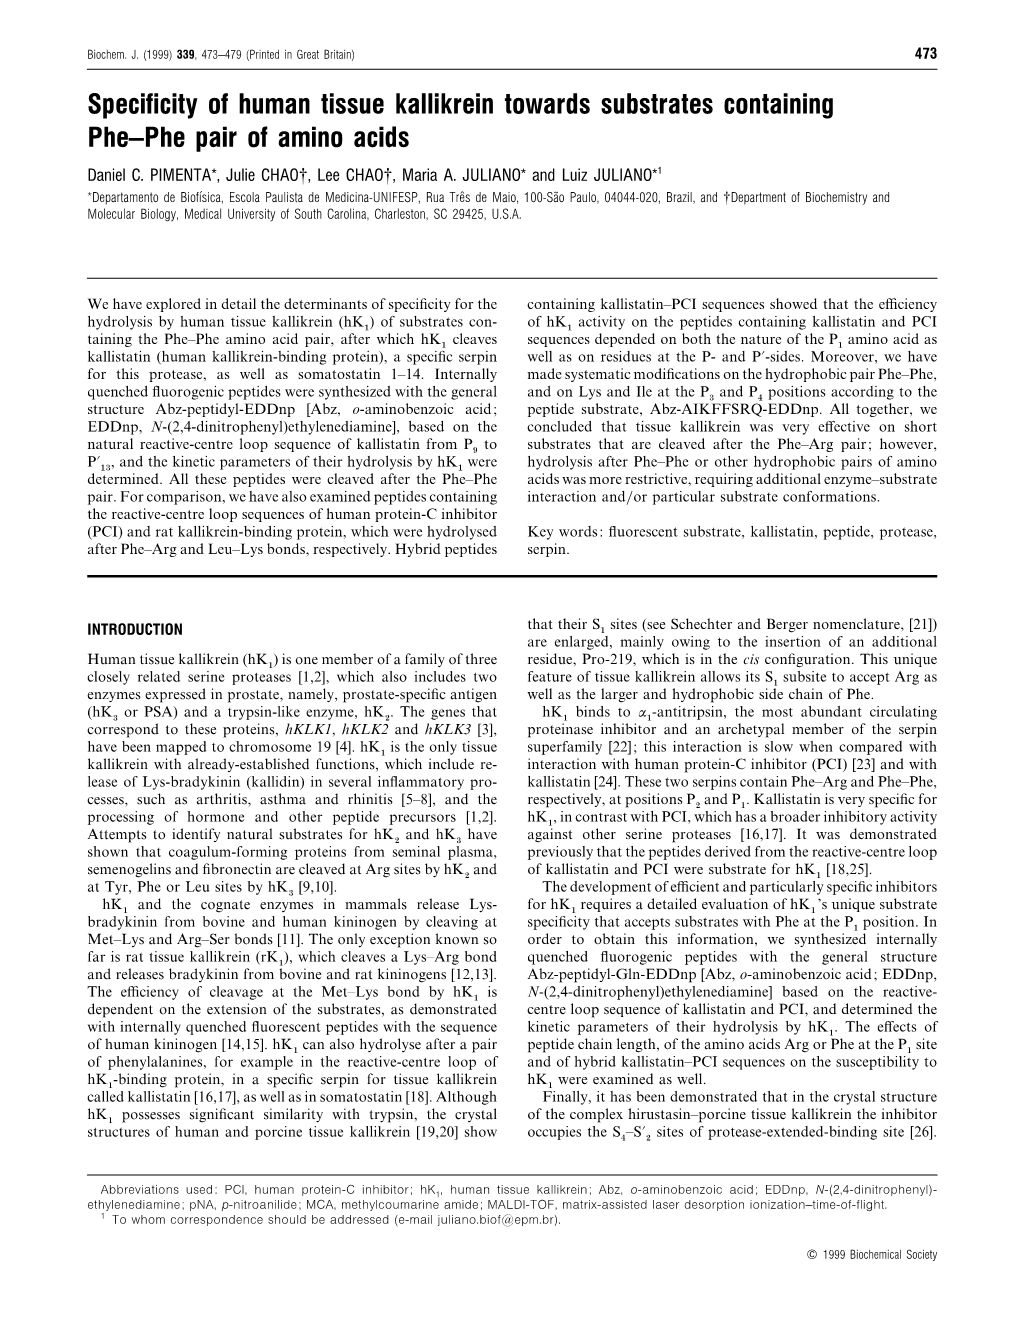 Specificity of Human Tissue Kallikrein Towards Substrates Containing Phe